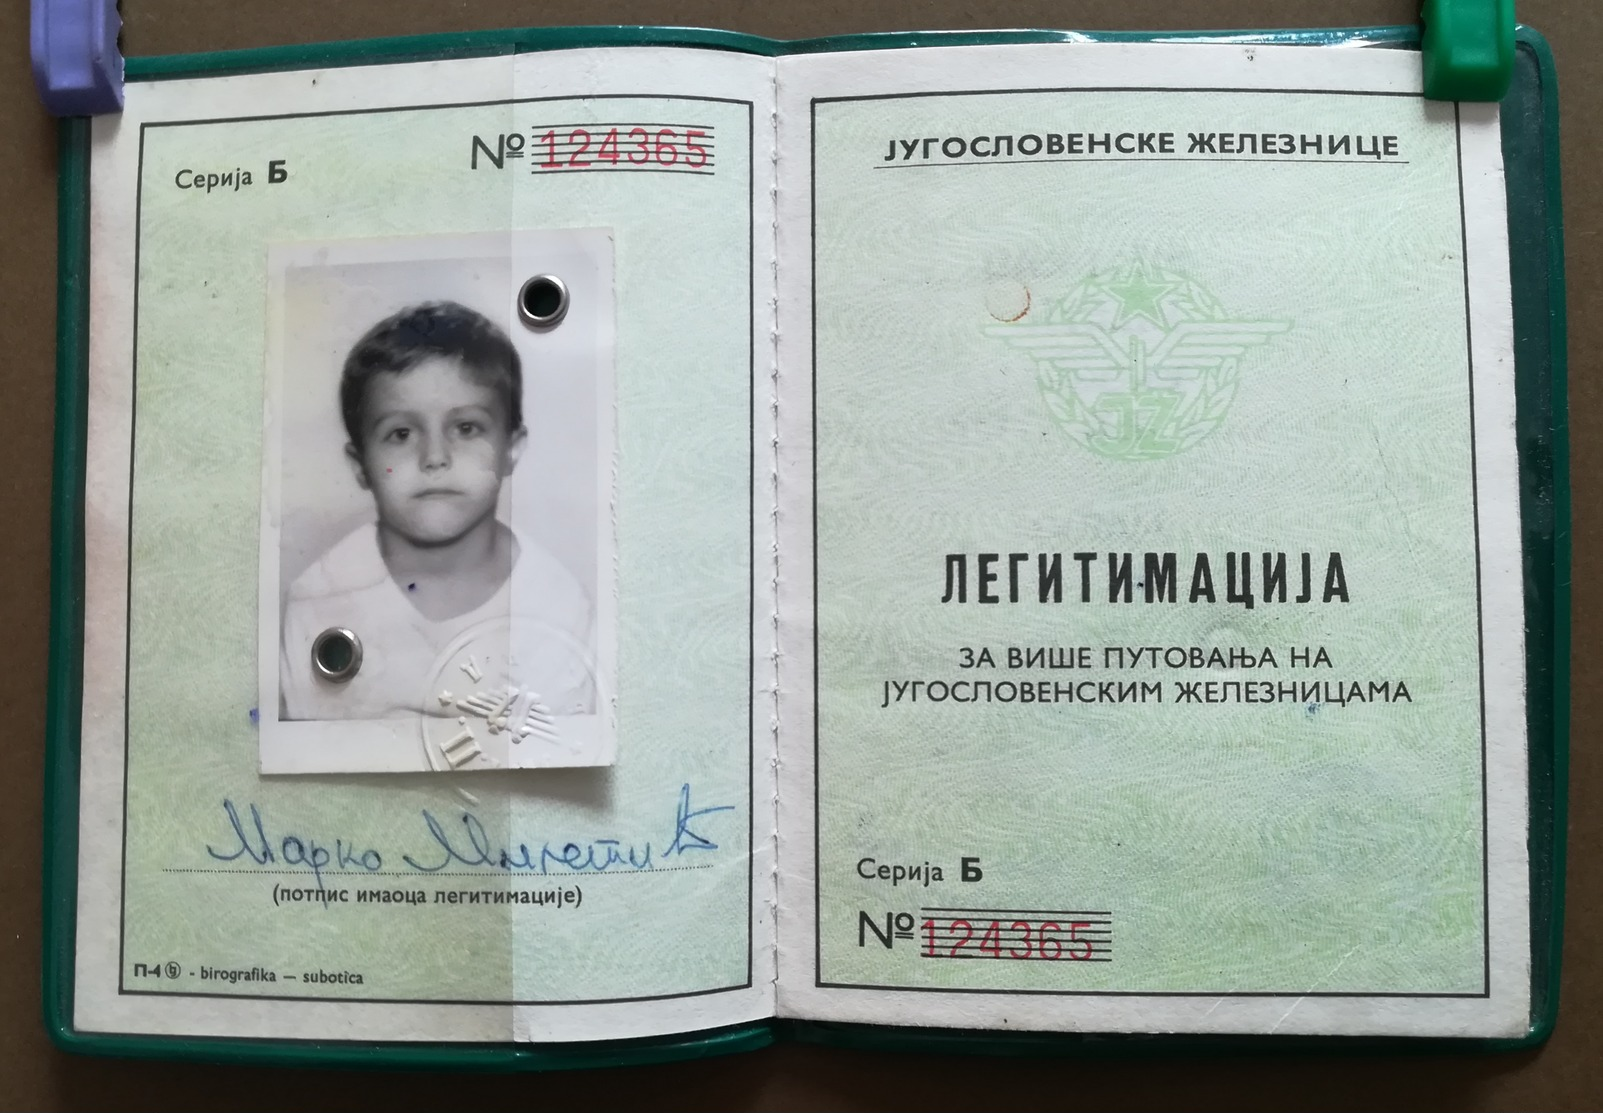 1983 YUGOSLAVIA Children's Railway Identity Card For Travel - Europe